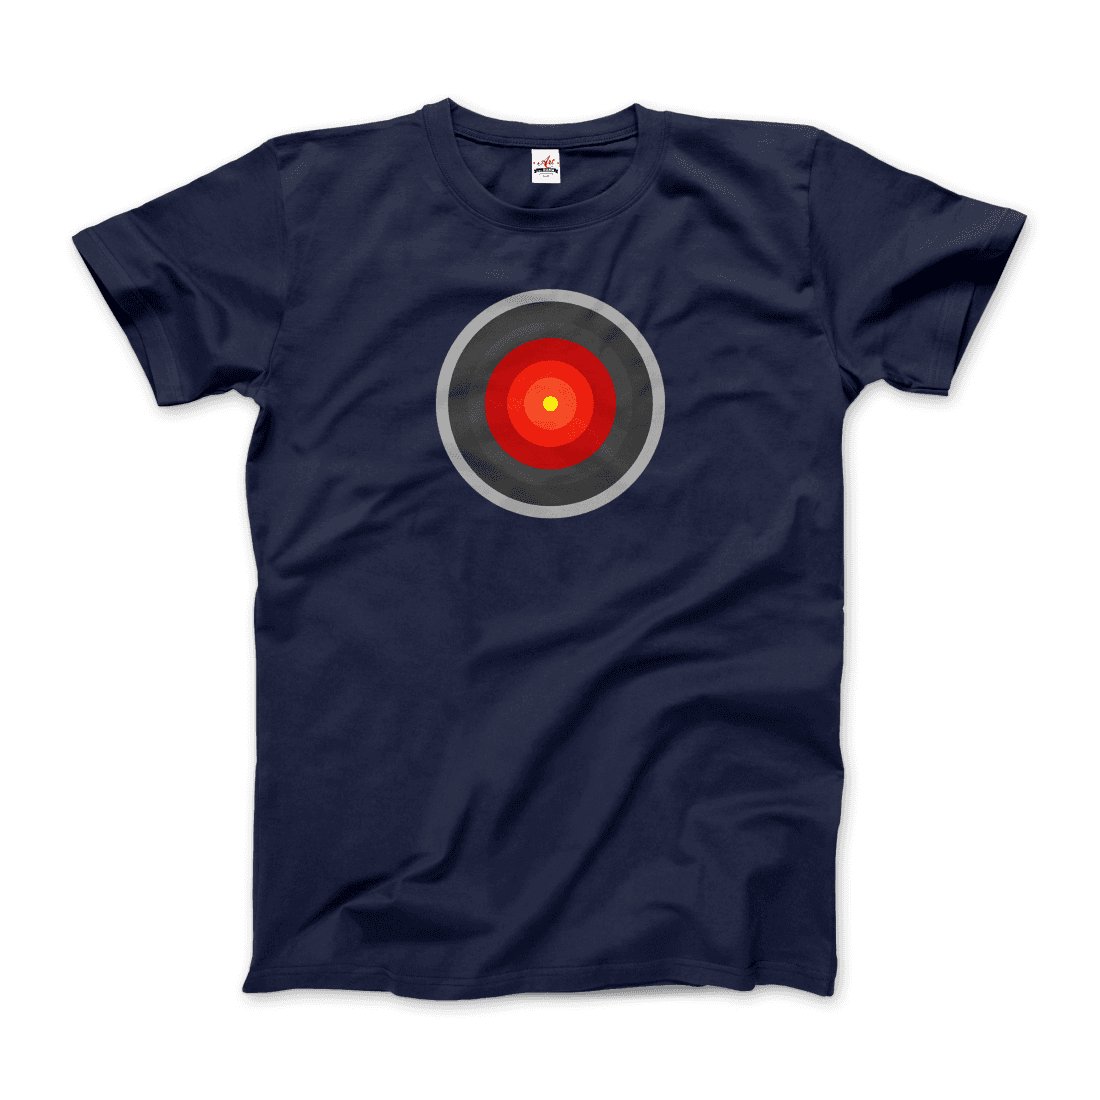 Hal 9000 Concept Design - 2001 Movie T-Shirt - KME means the very best